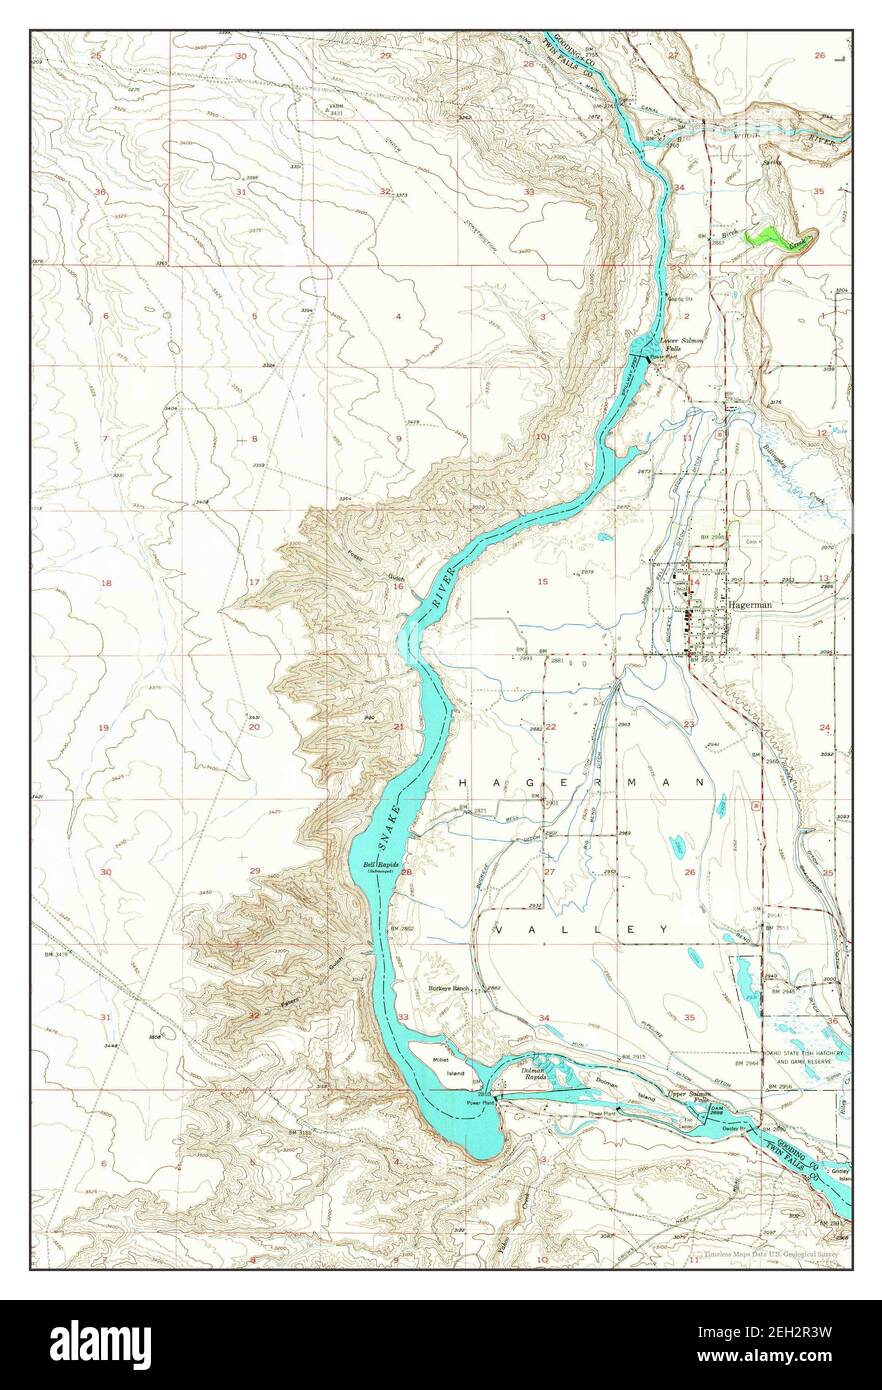 Hagerman, Idaho, map 1949, 1:24000, United States of America by Timeless Maps, data U.S. Geological Survey Stock Photo